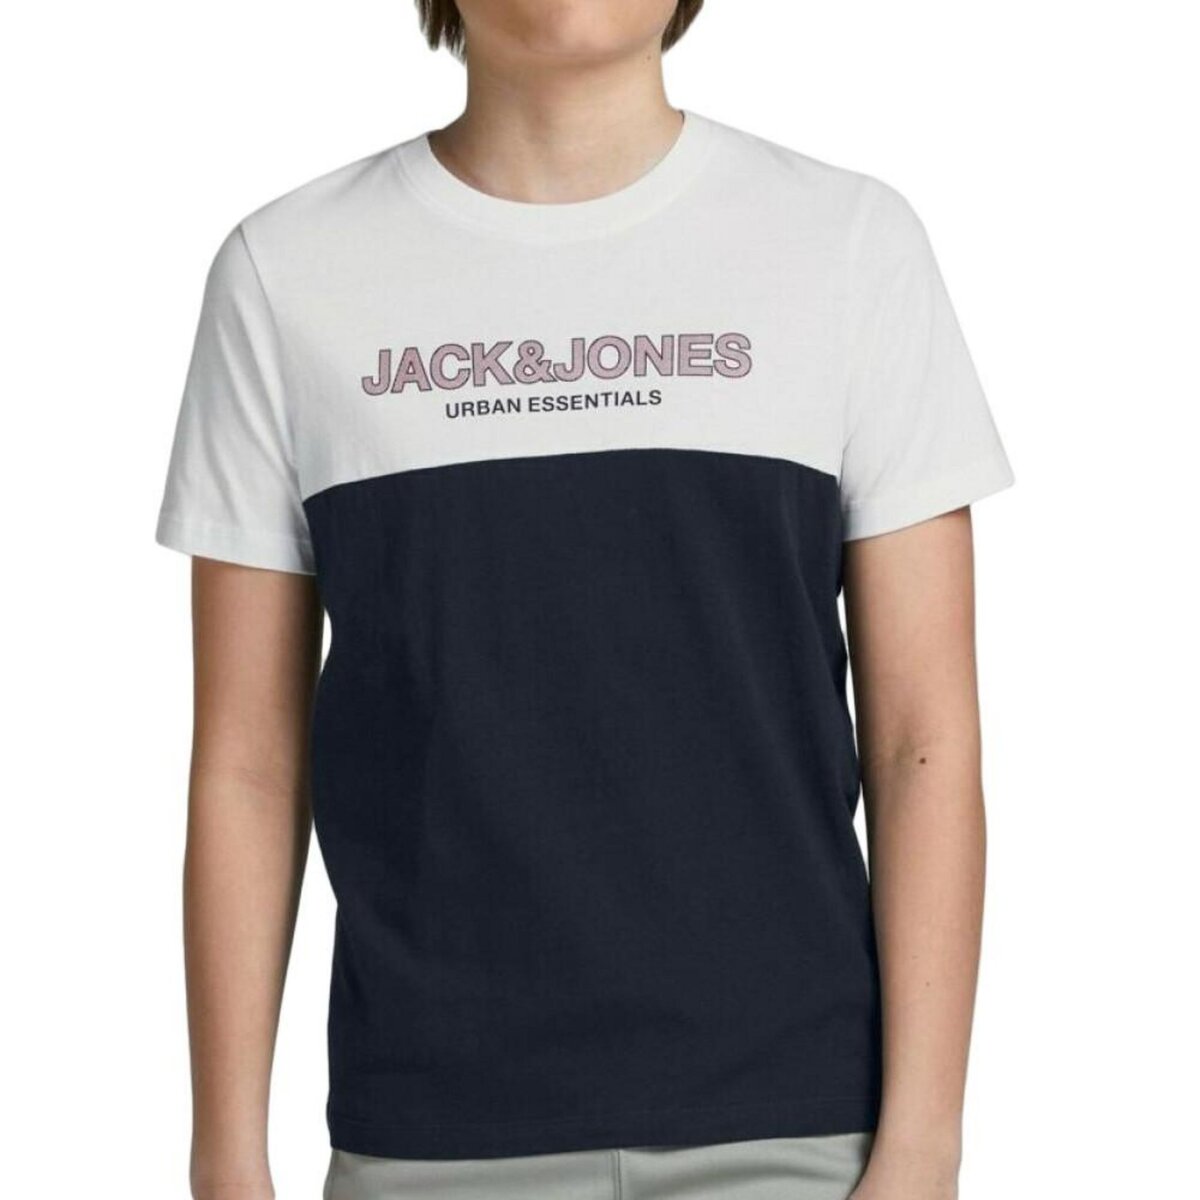  T-shirt Blanc/Marine Garçon Jack and Jones Urban